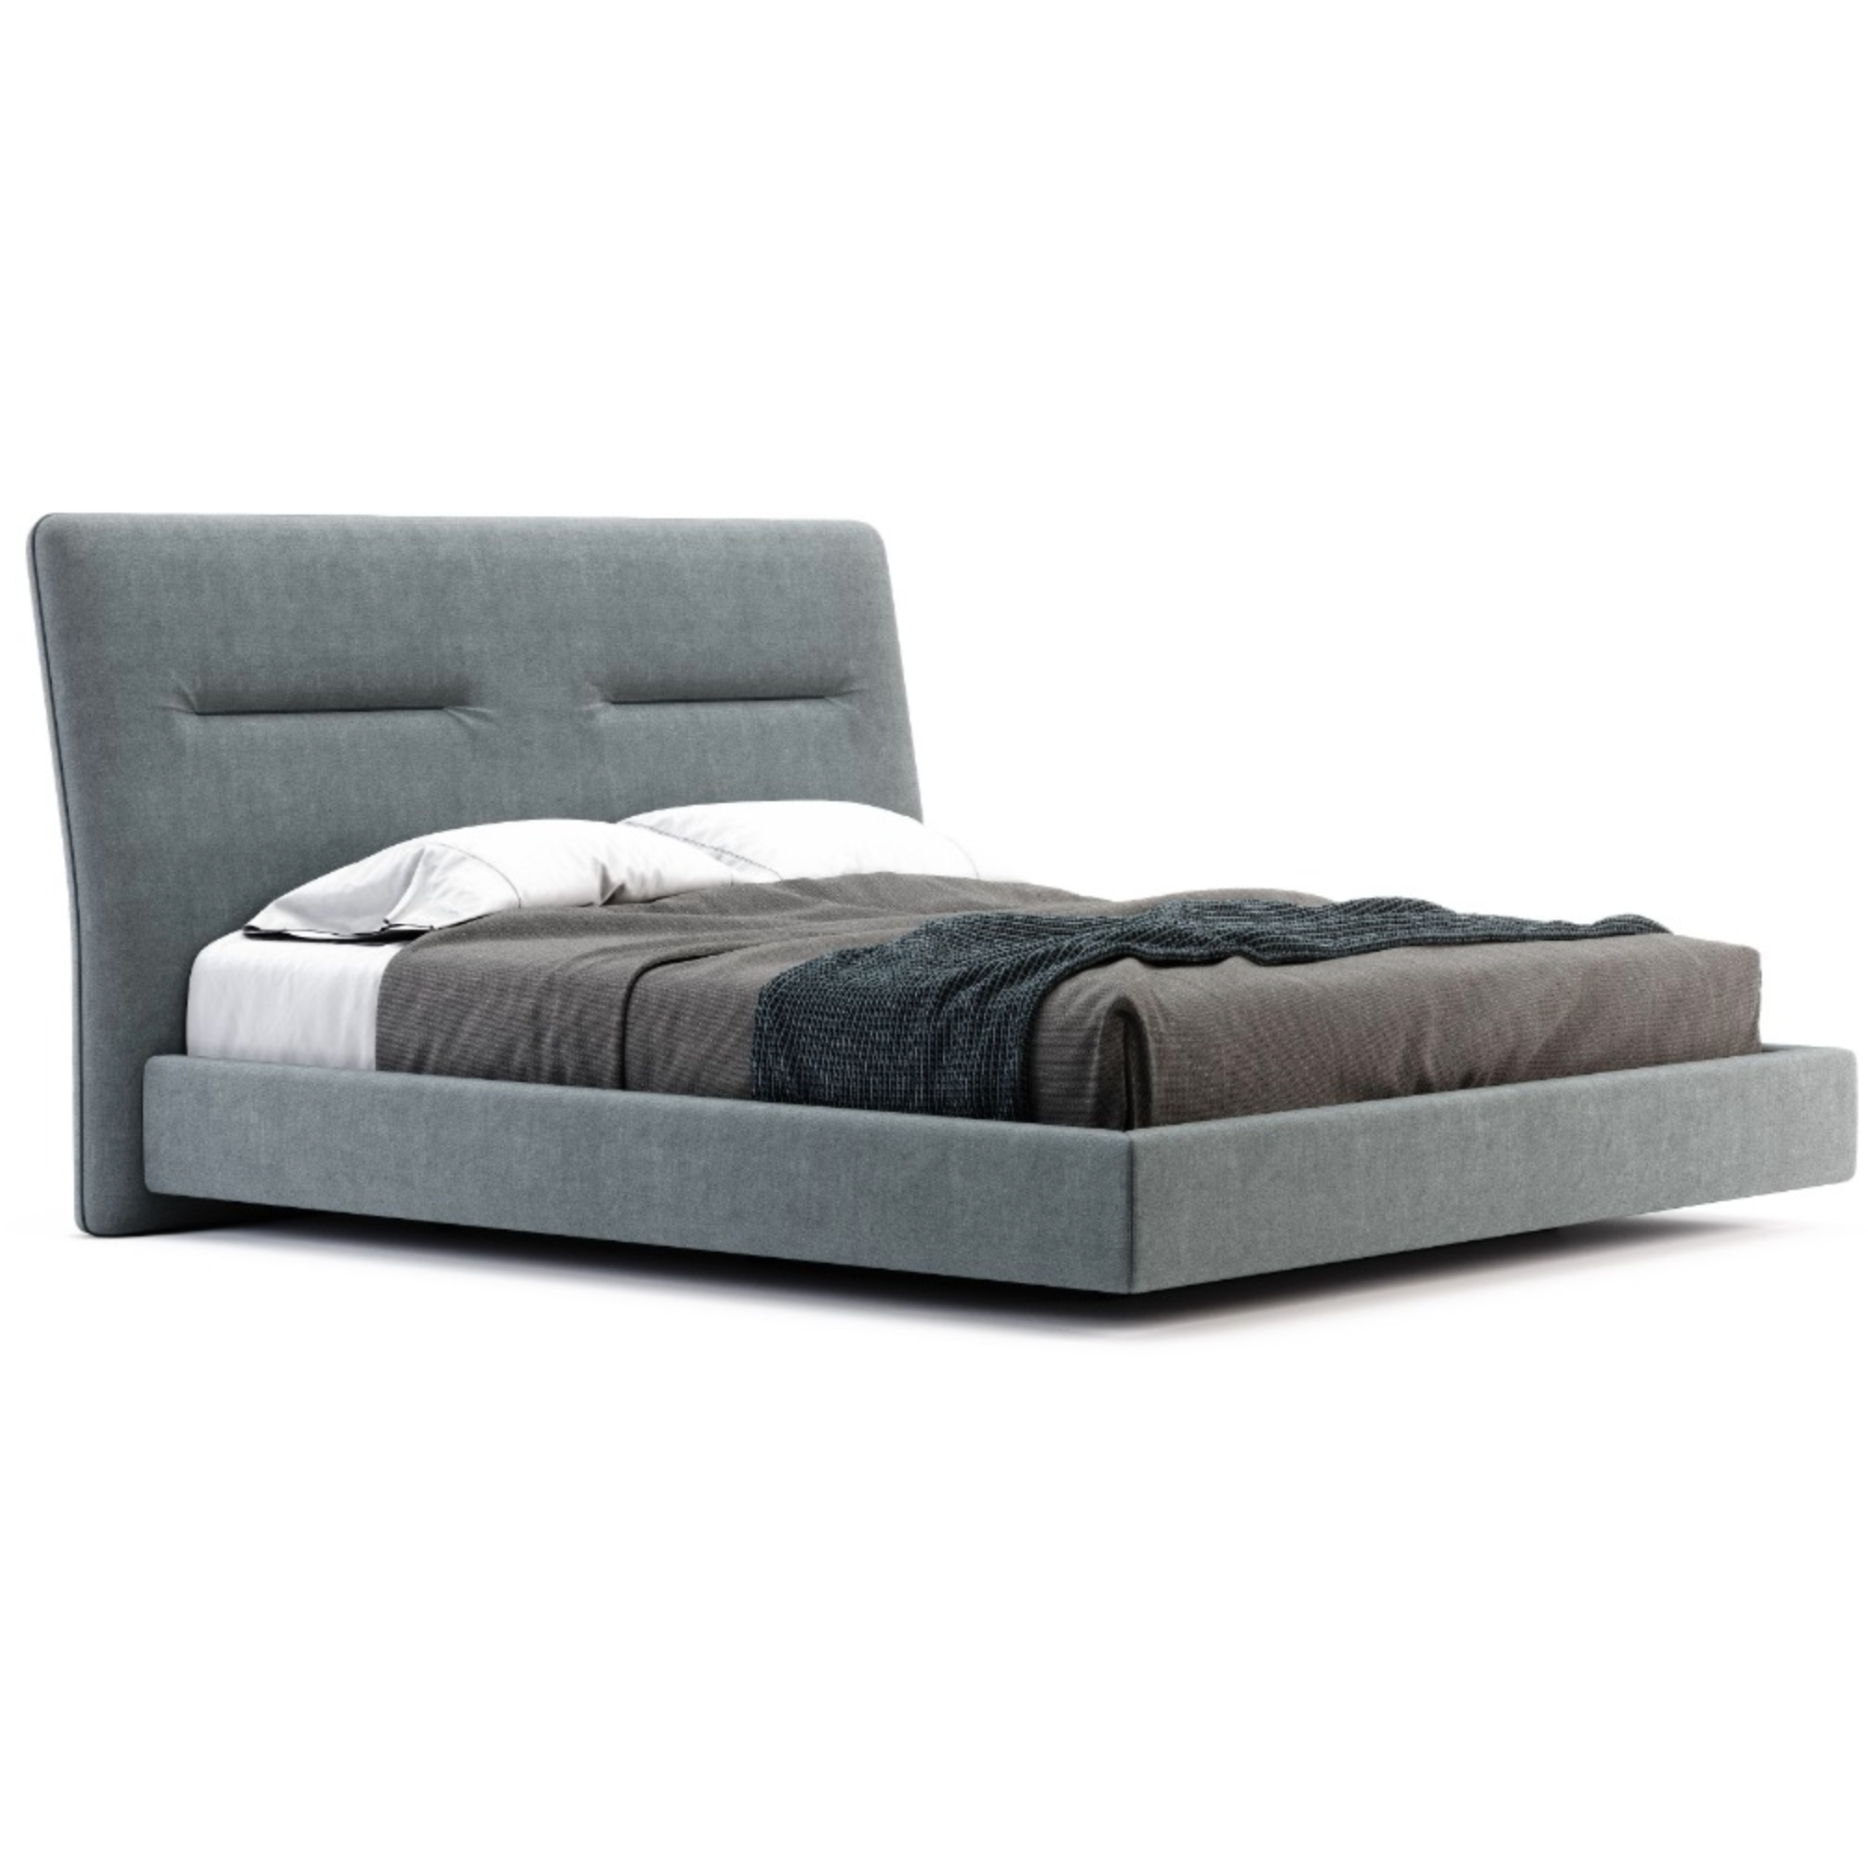 Domkapa Helen King Size Bed - Customisable | Modern Furniture + Decor